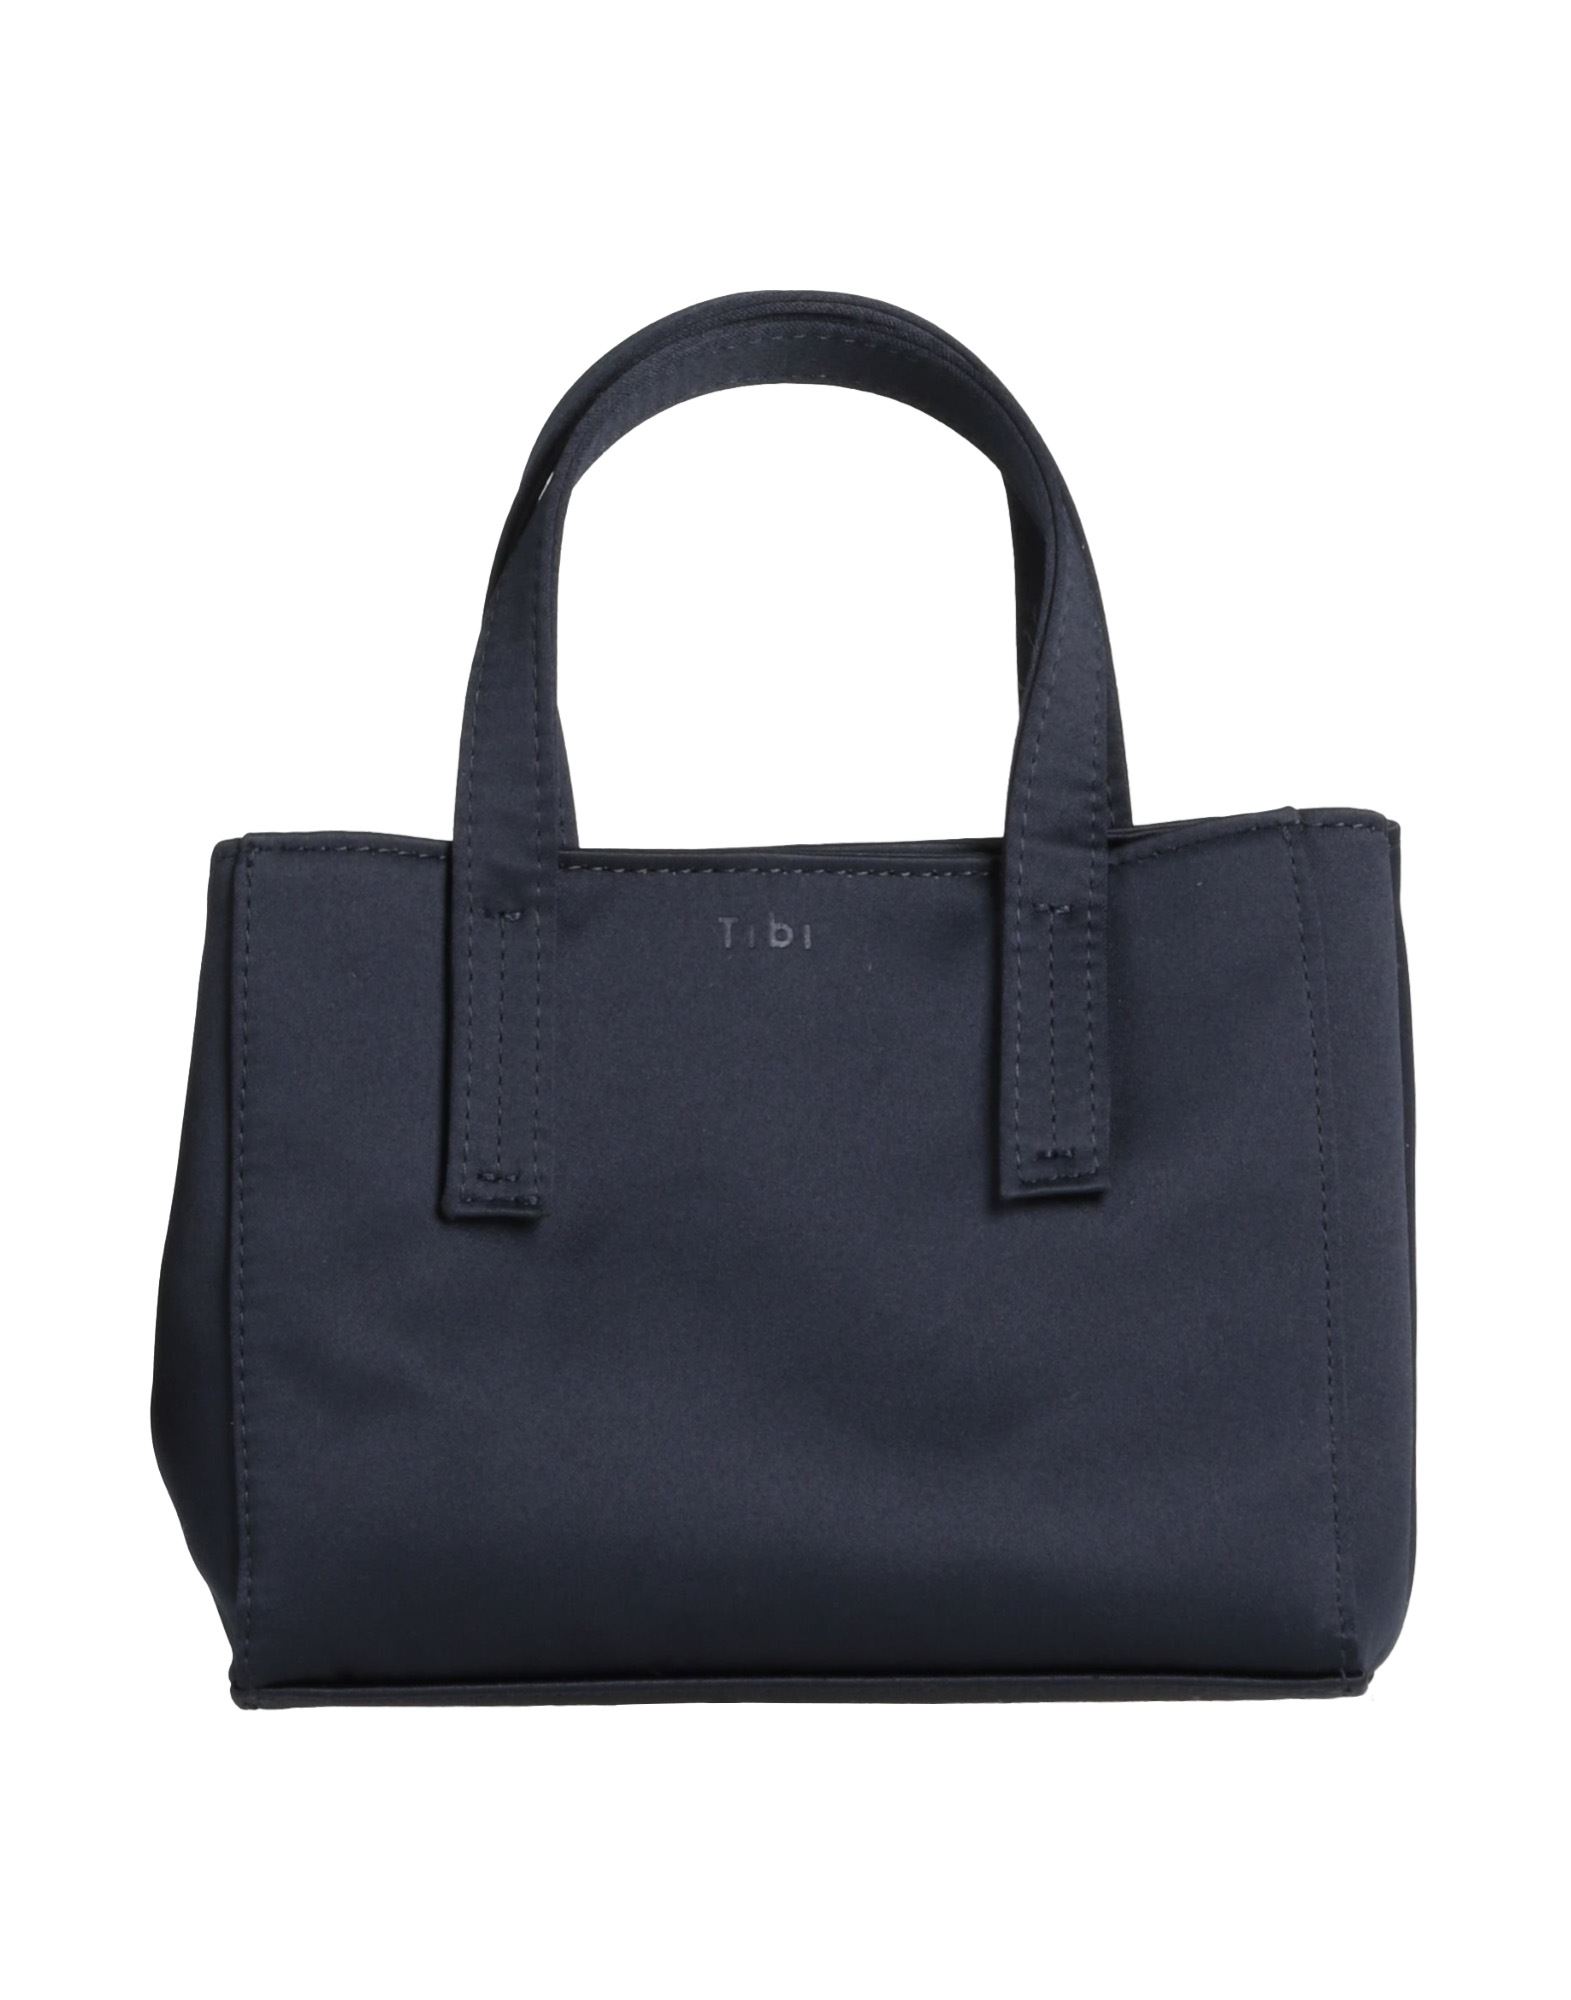 Tibi Handbags In Dark Blue